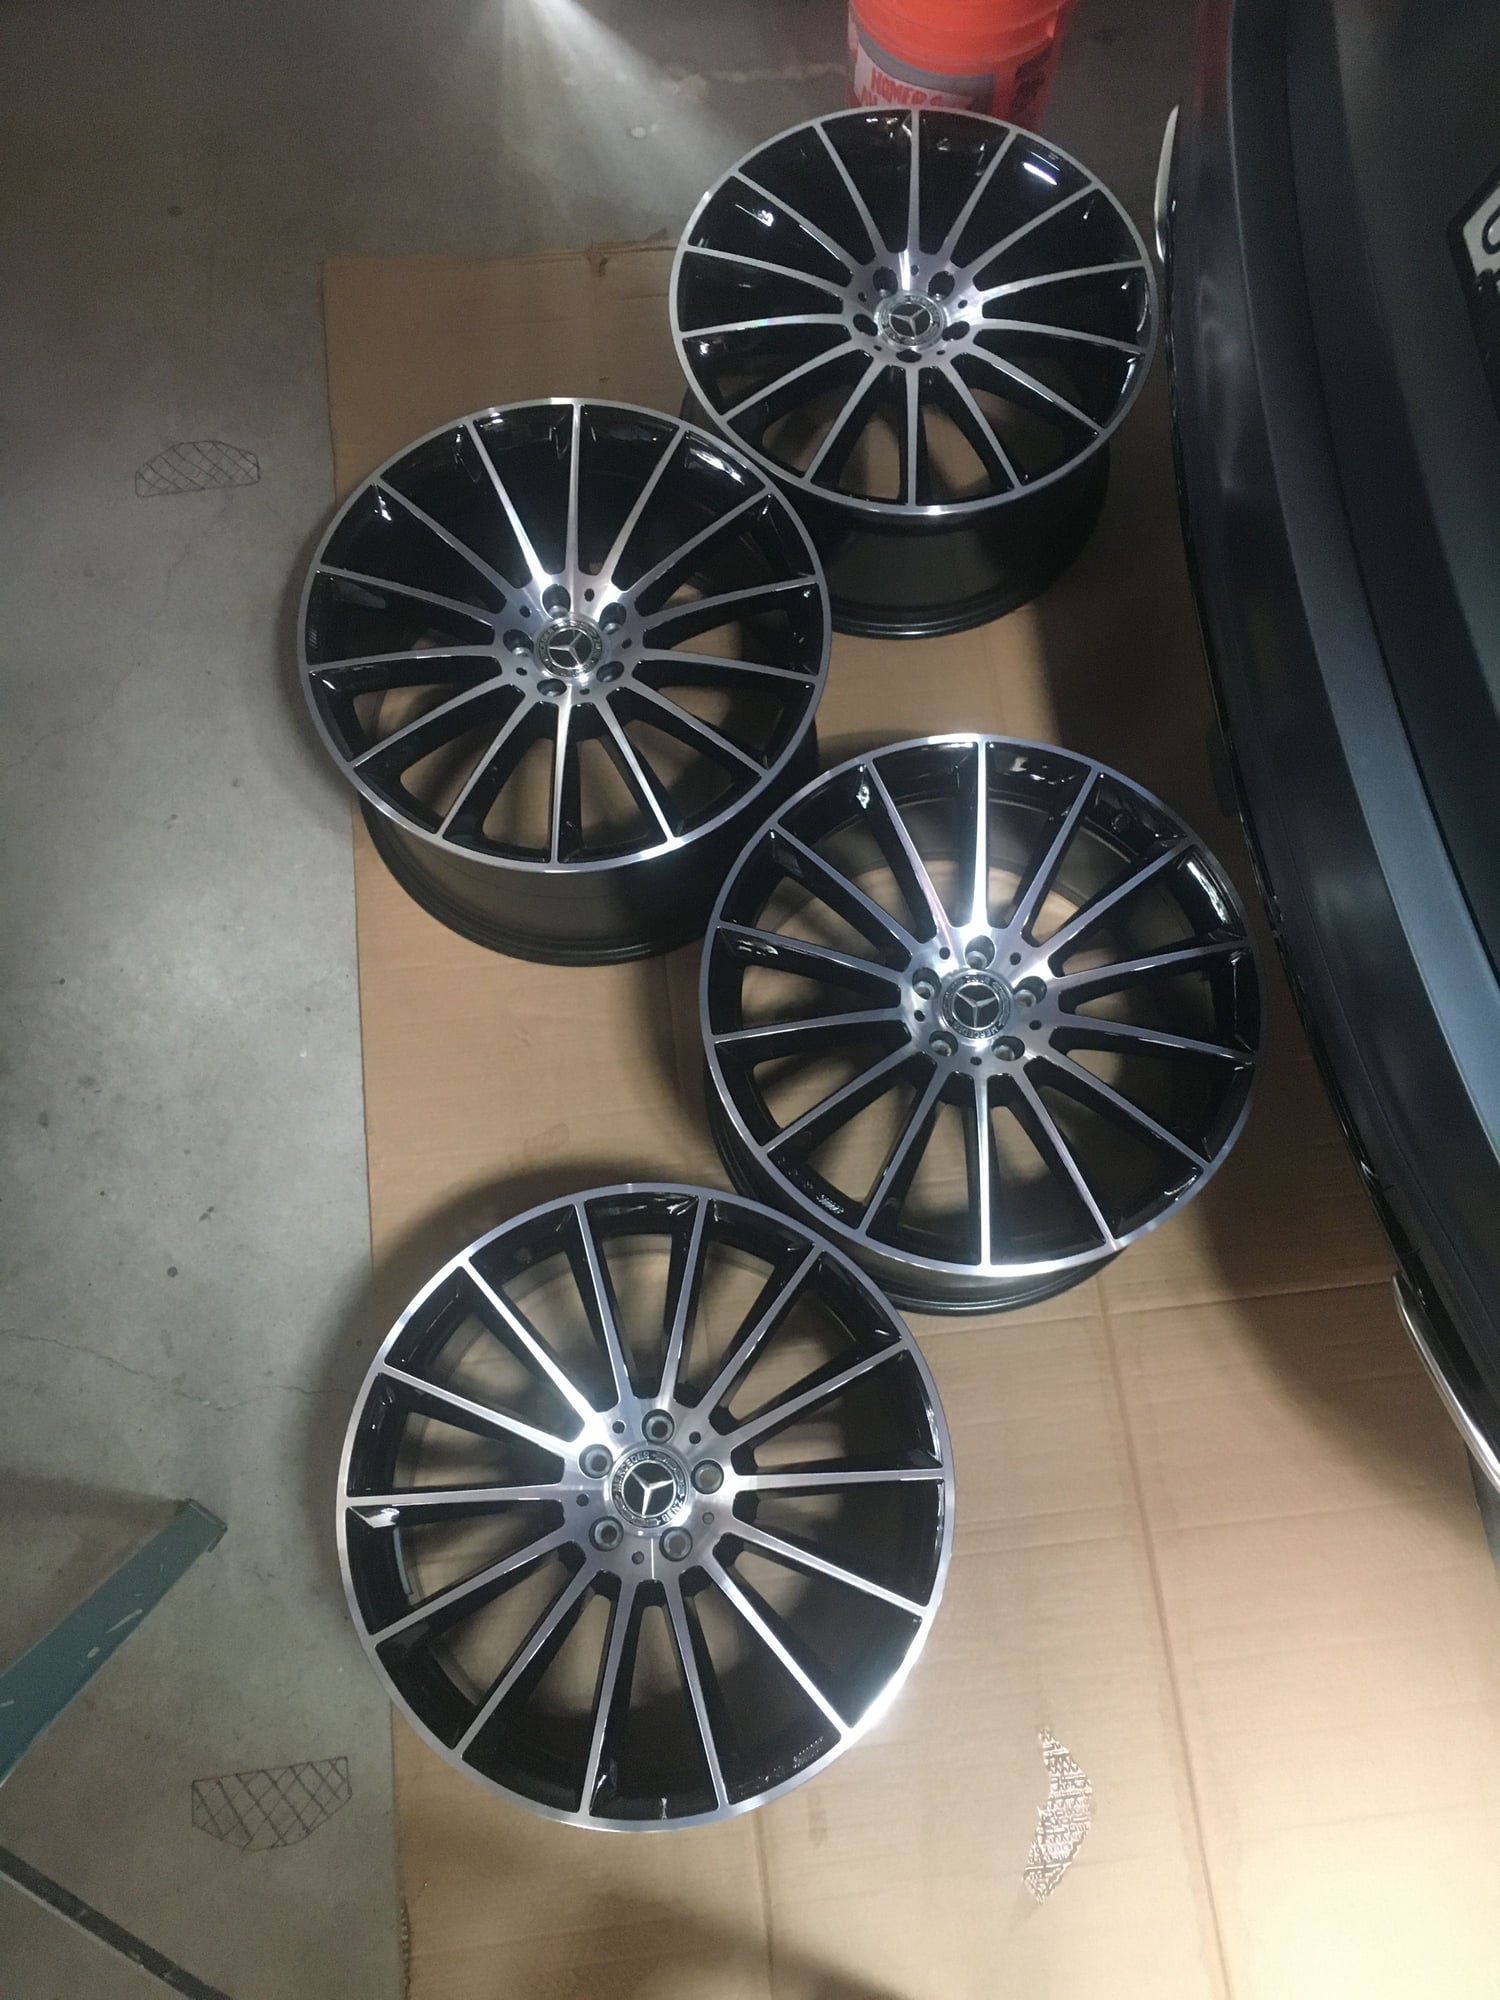 Wheels and Tires/Axles - GLE multi-spoke 21"AMG wheels w/ black pockets (reduced price) - Used - 2019 to 2023 Mercedes-Benz GLE450 - Santa Barbara, CA 93117, United States